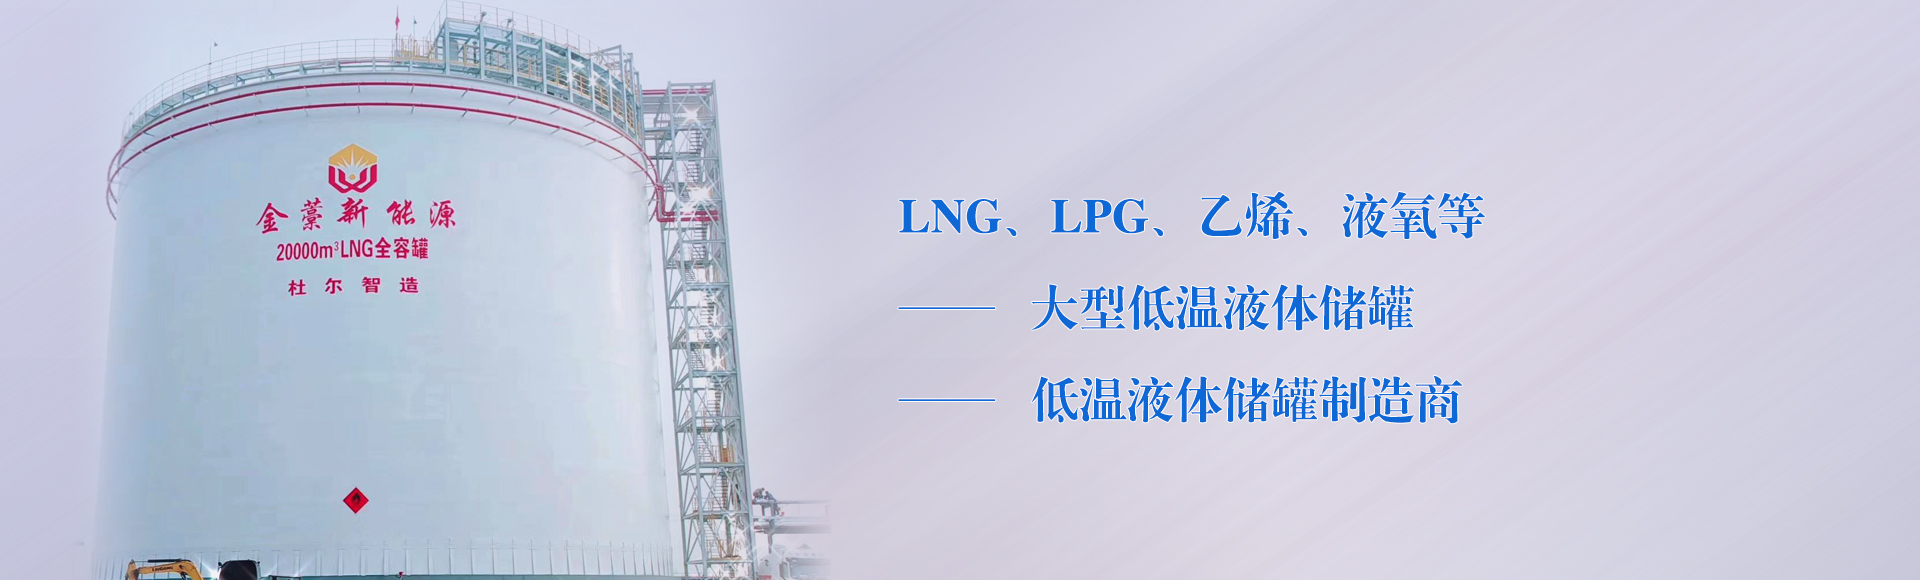 205、LNG Operating Procedures - Doer Equipment